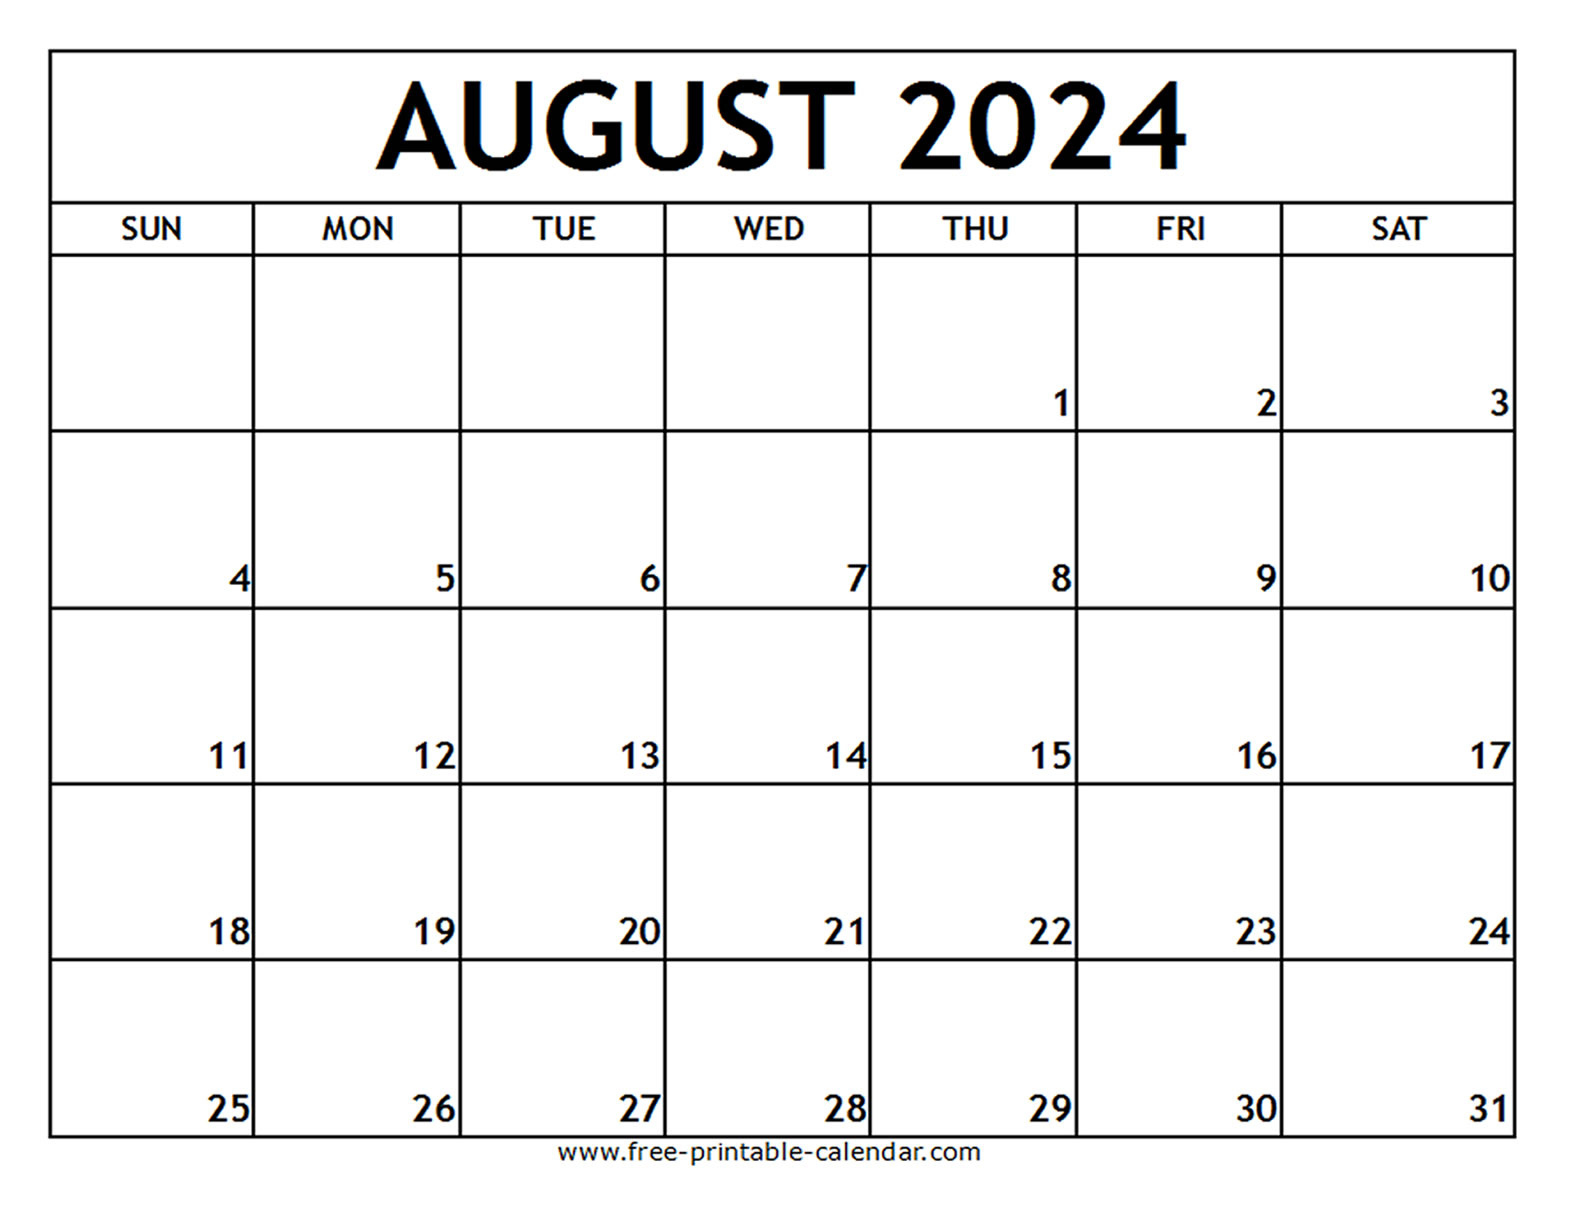 August 2024 Printable Calendar - Free-Printable-Calendar intended for Blank July August Calendar 2024